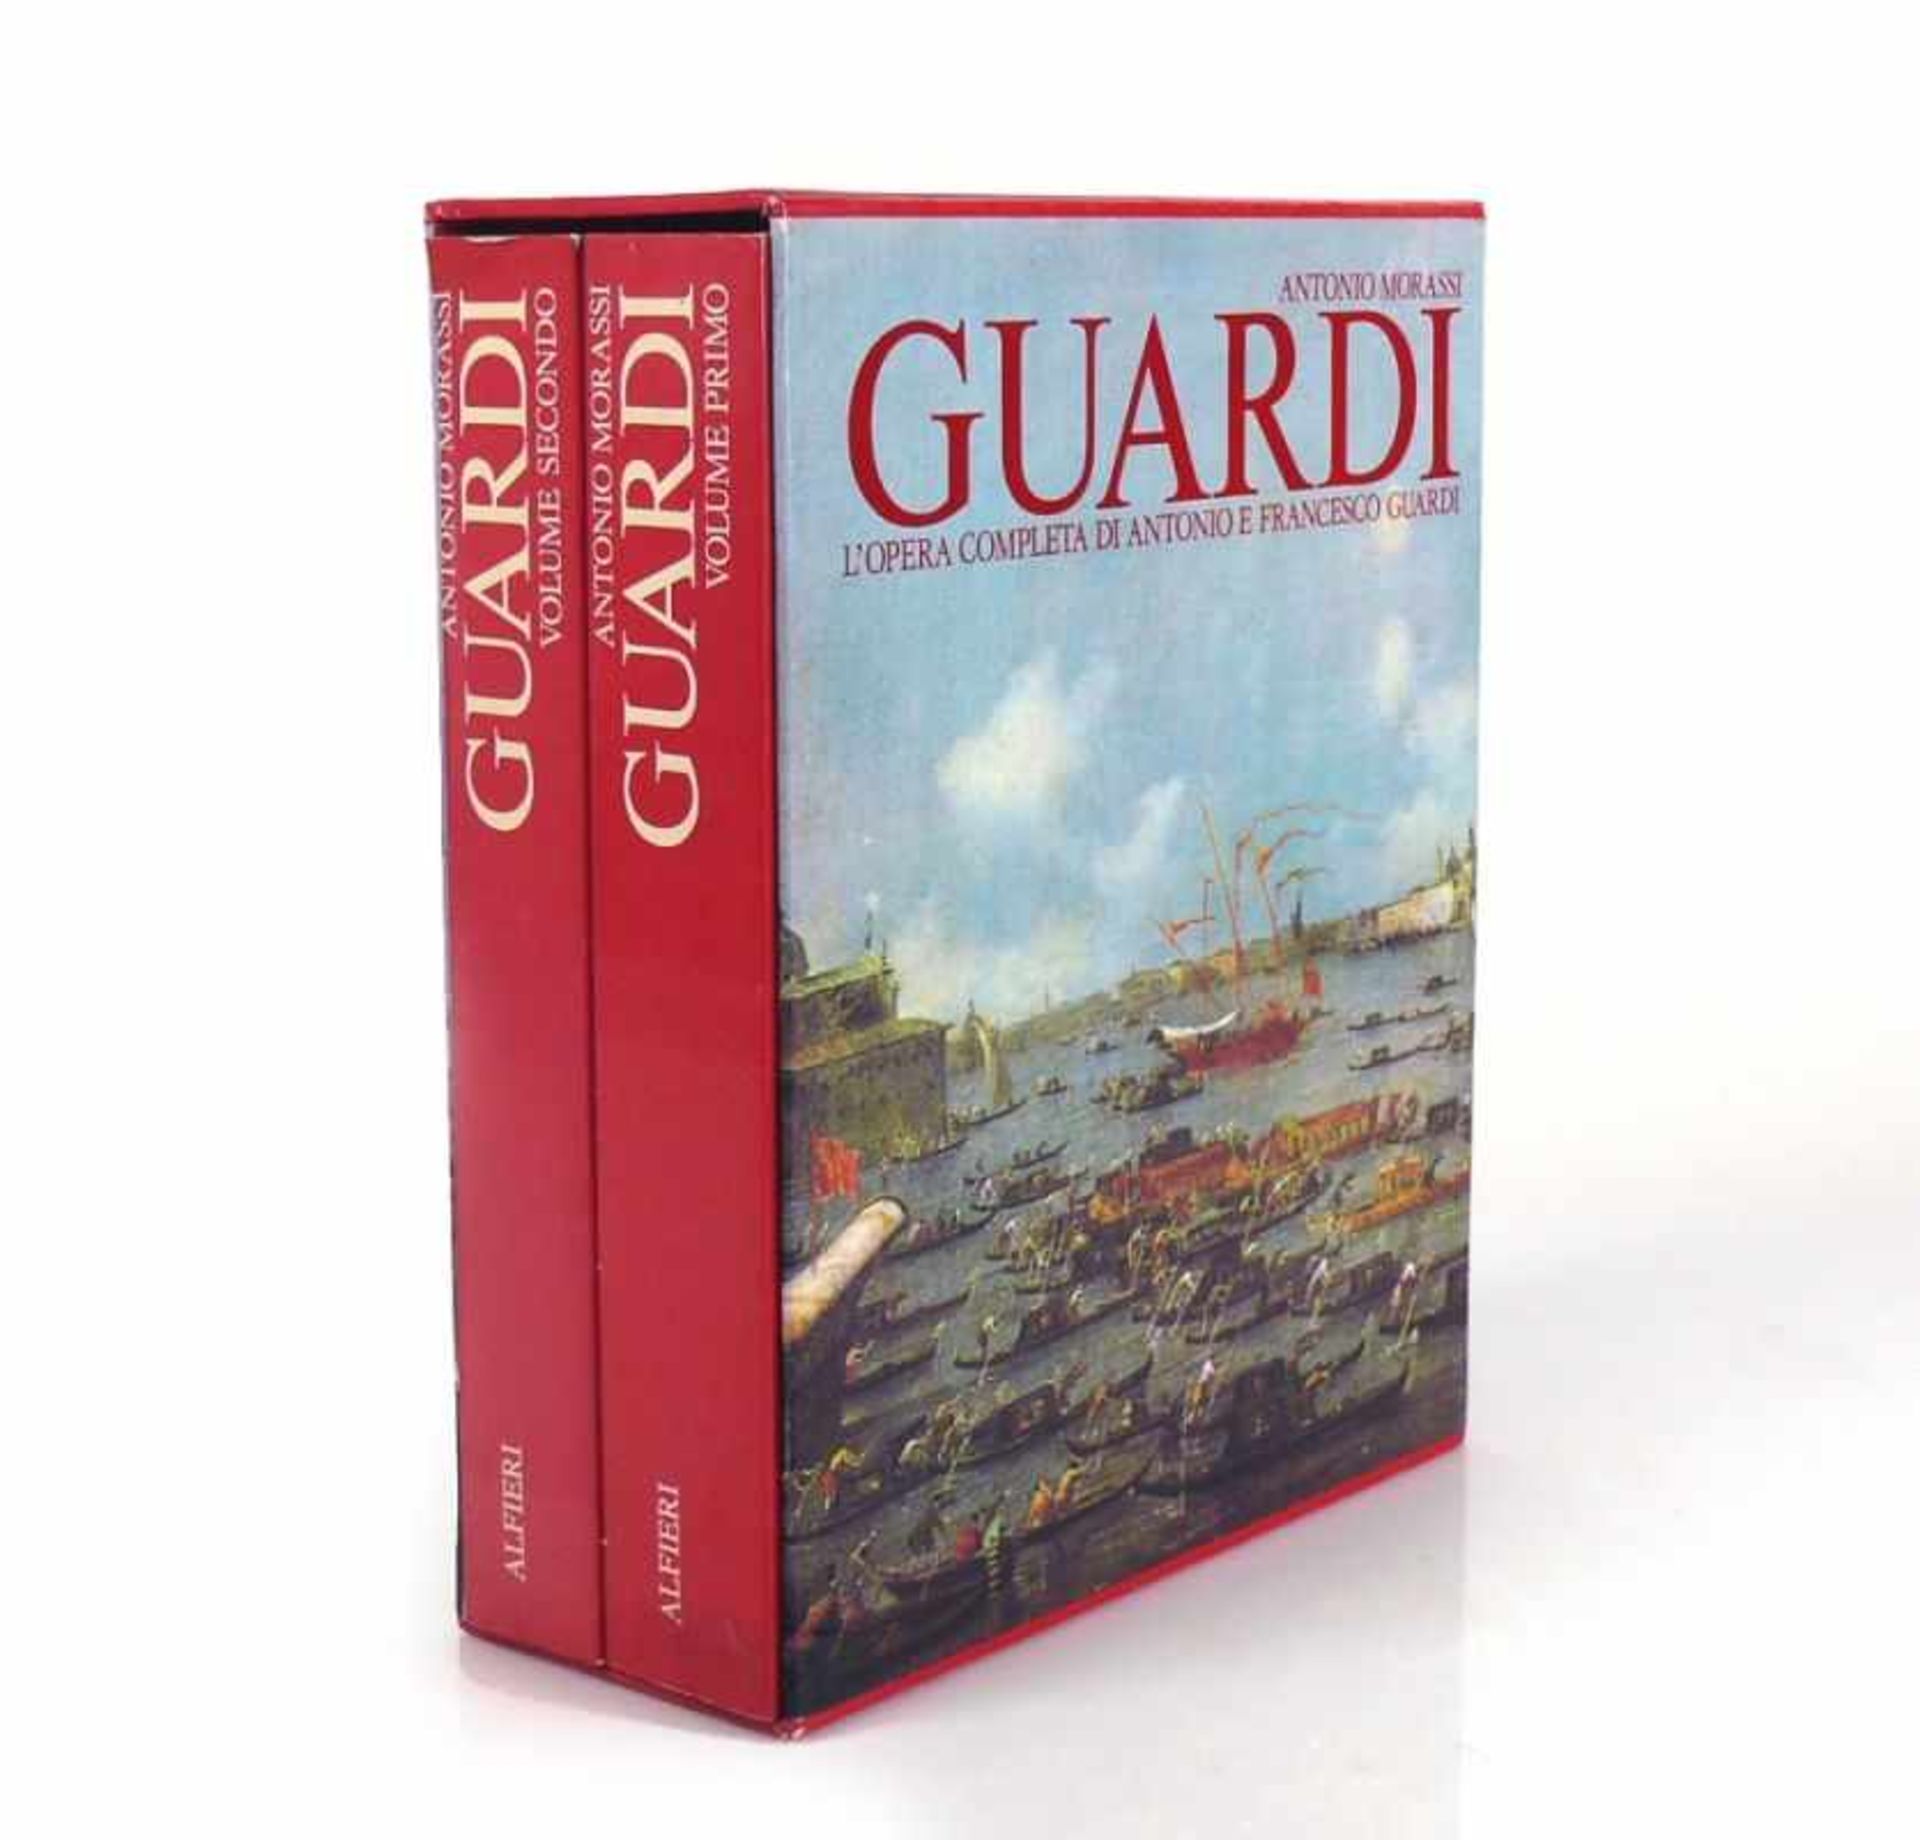 GUARDIANTONIO E FRANCESCO GUARDI; Werkverzeichnis von Antonio Morassi; 2 Bände; Drucker Alfieri;